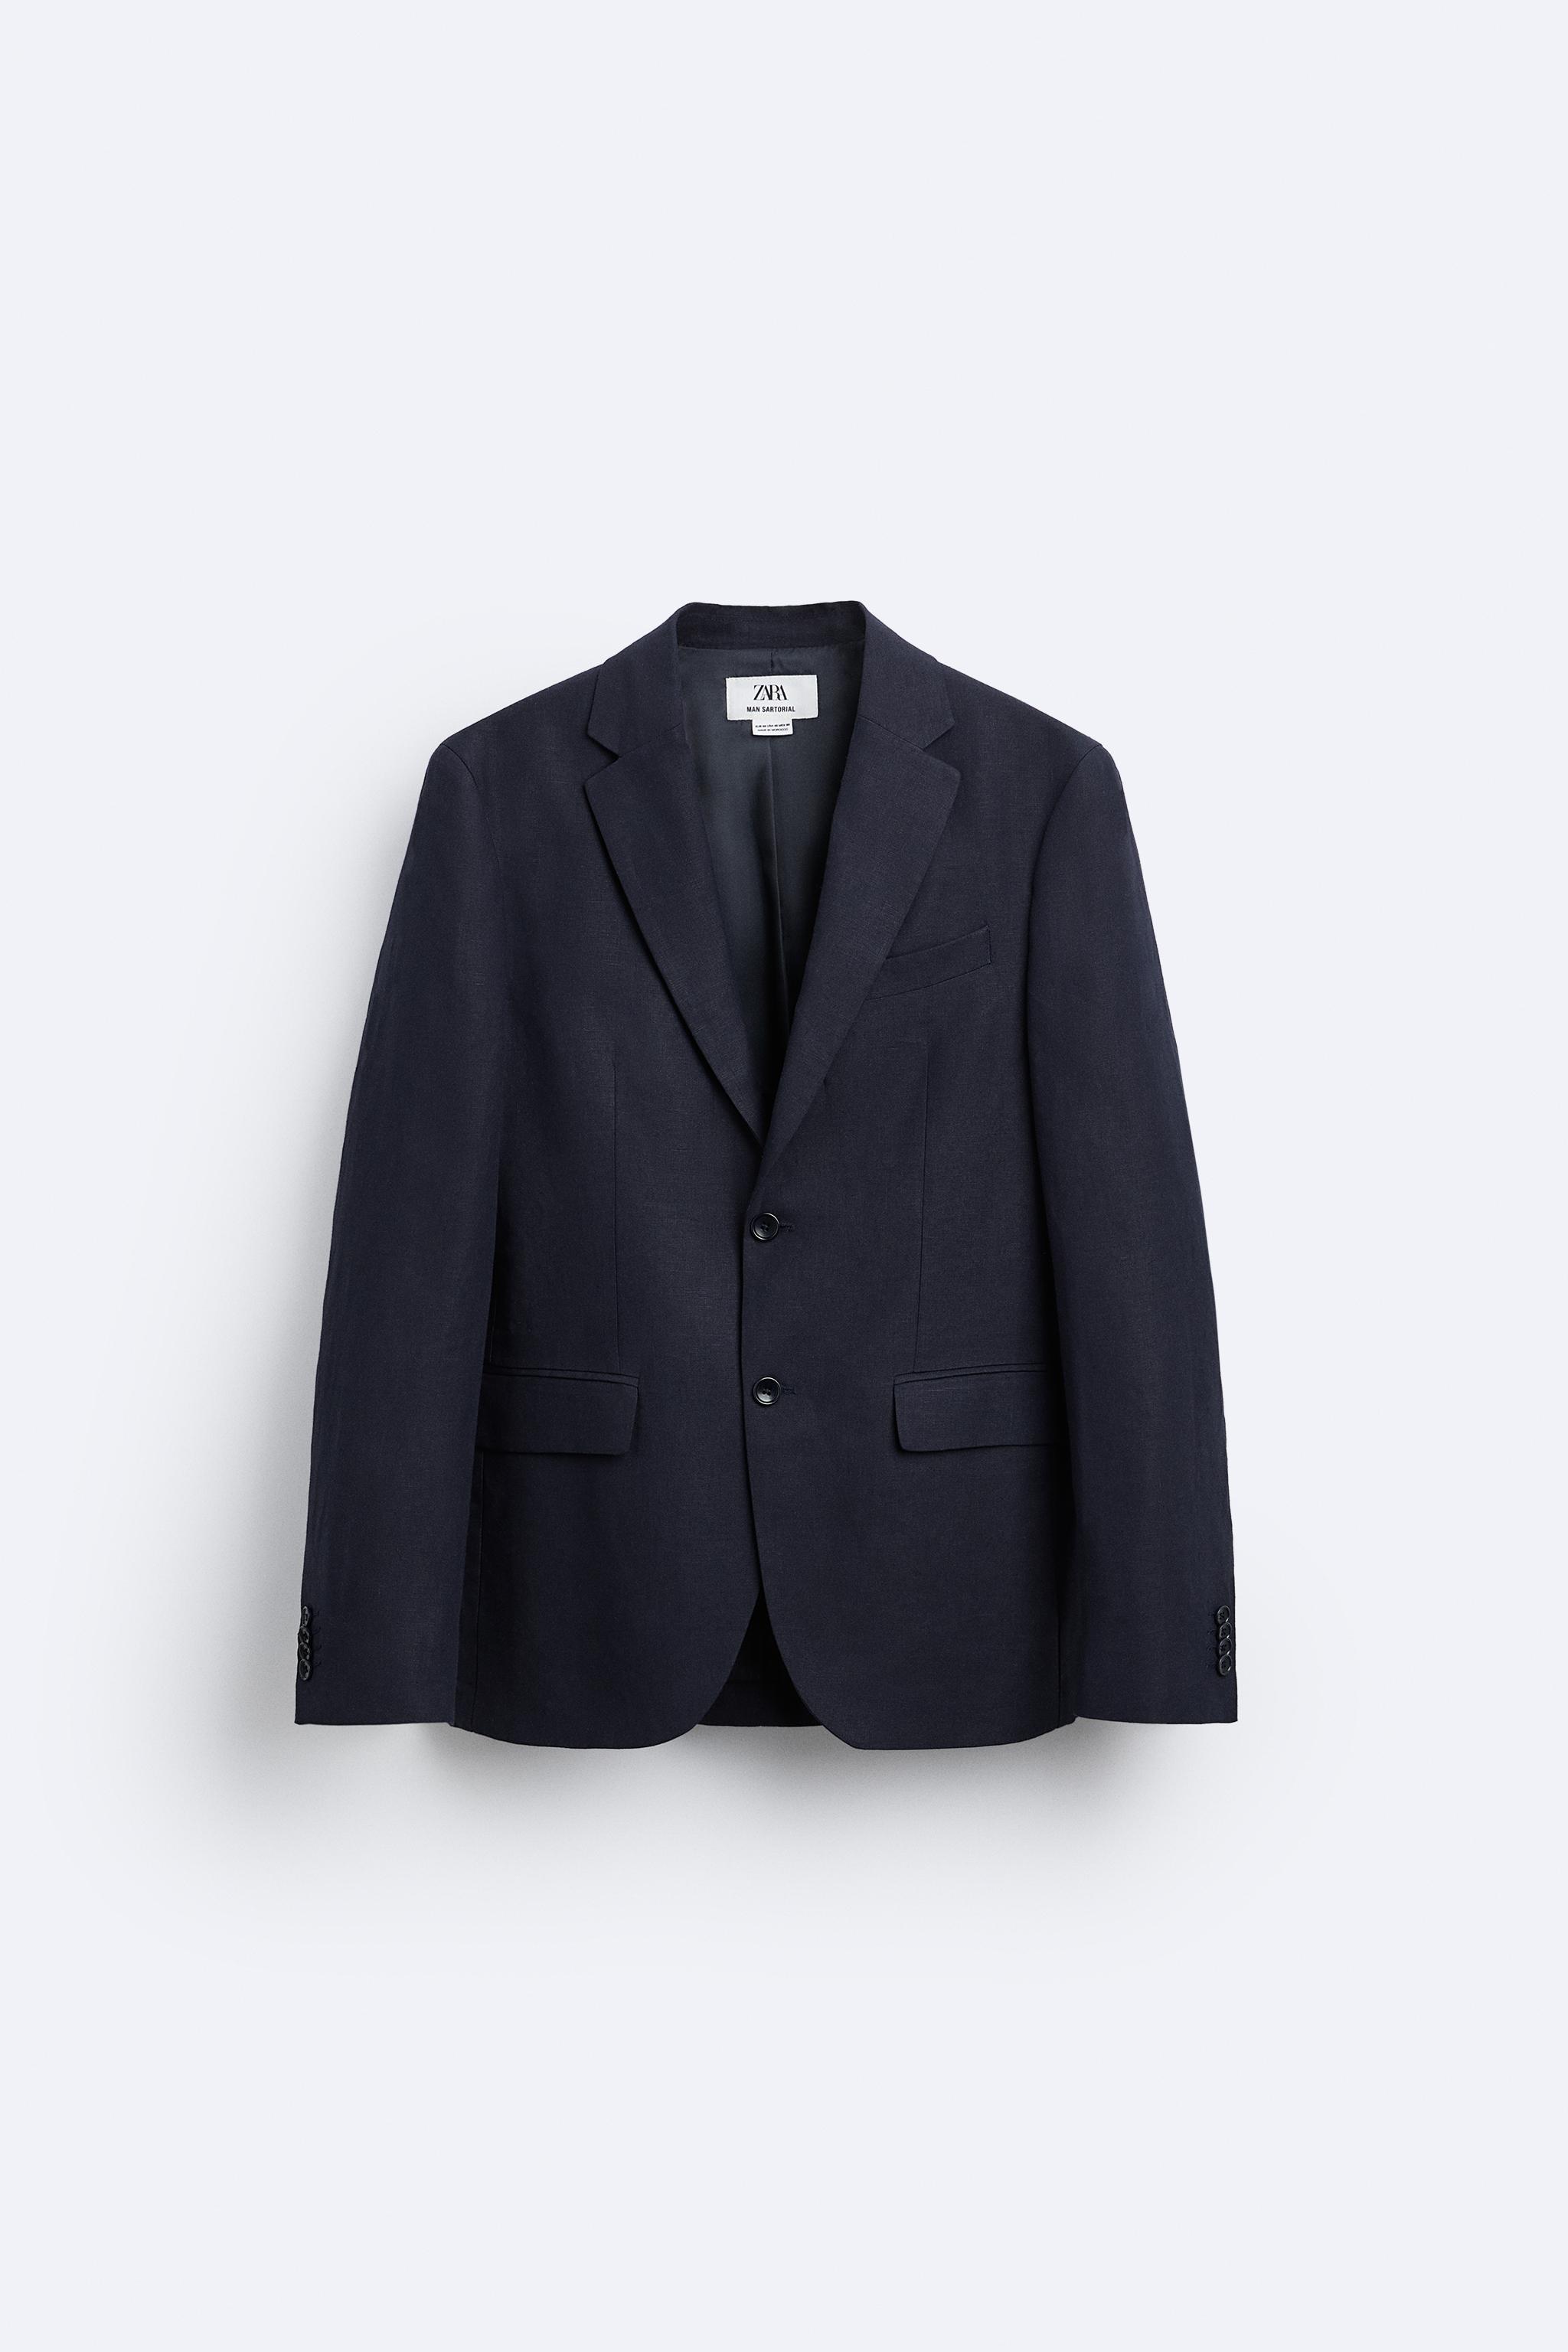 Blazer Zara Comfort Tailoring Azul Masculino Original - SOK11